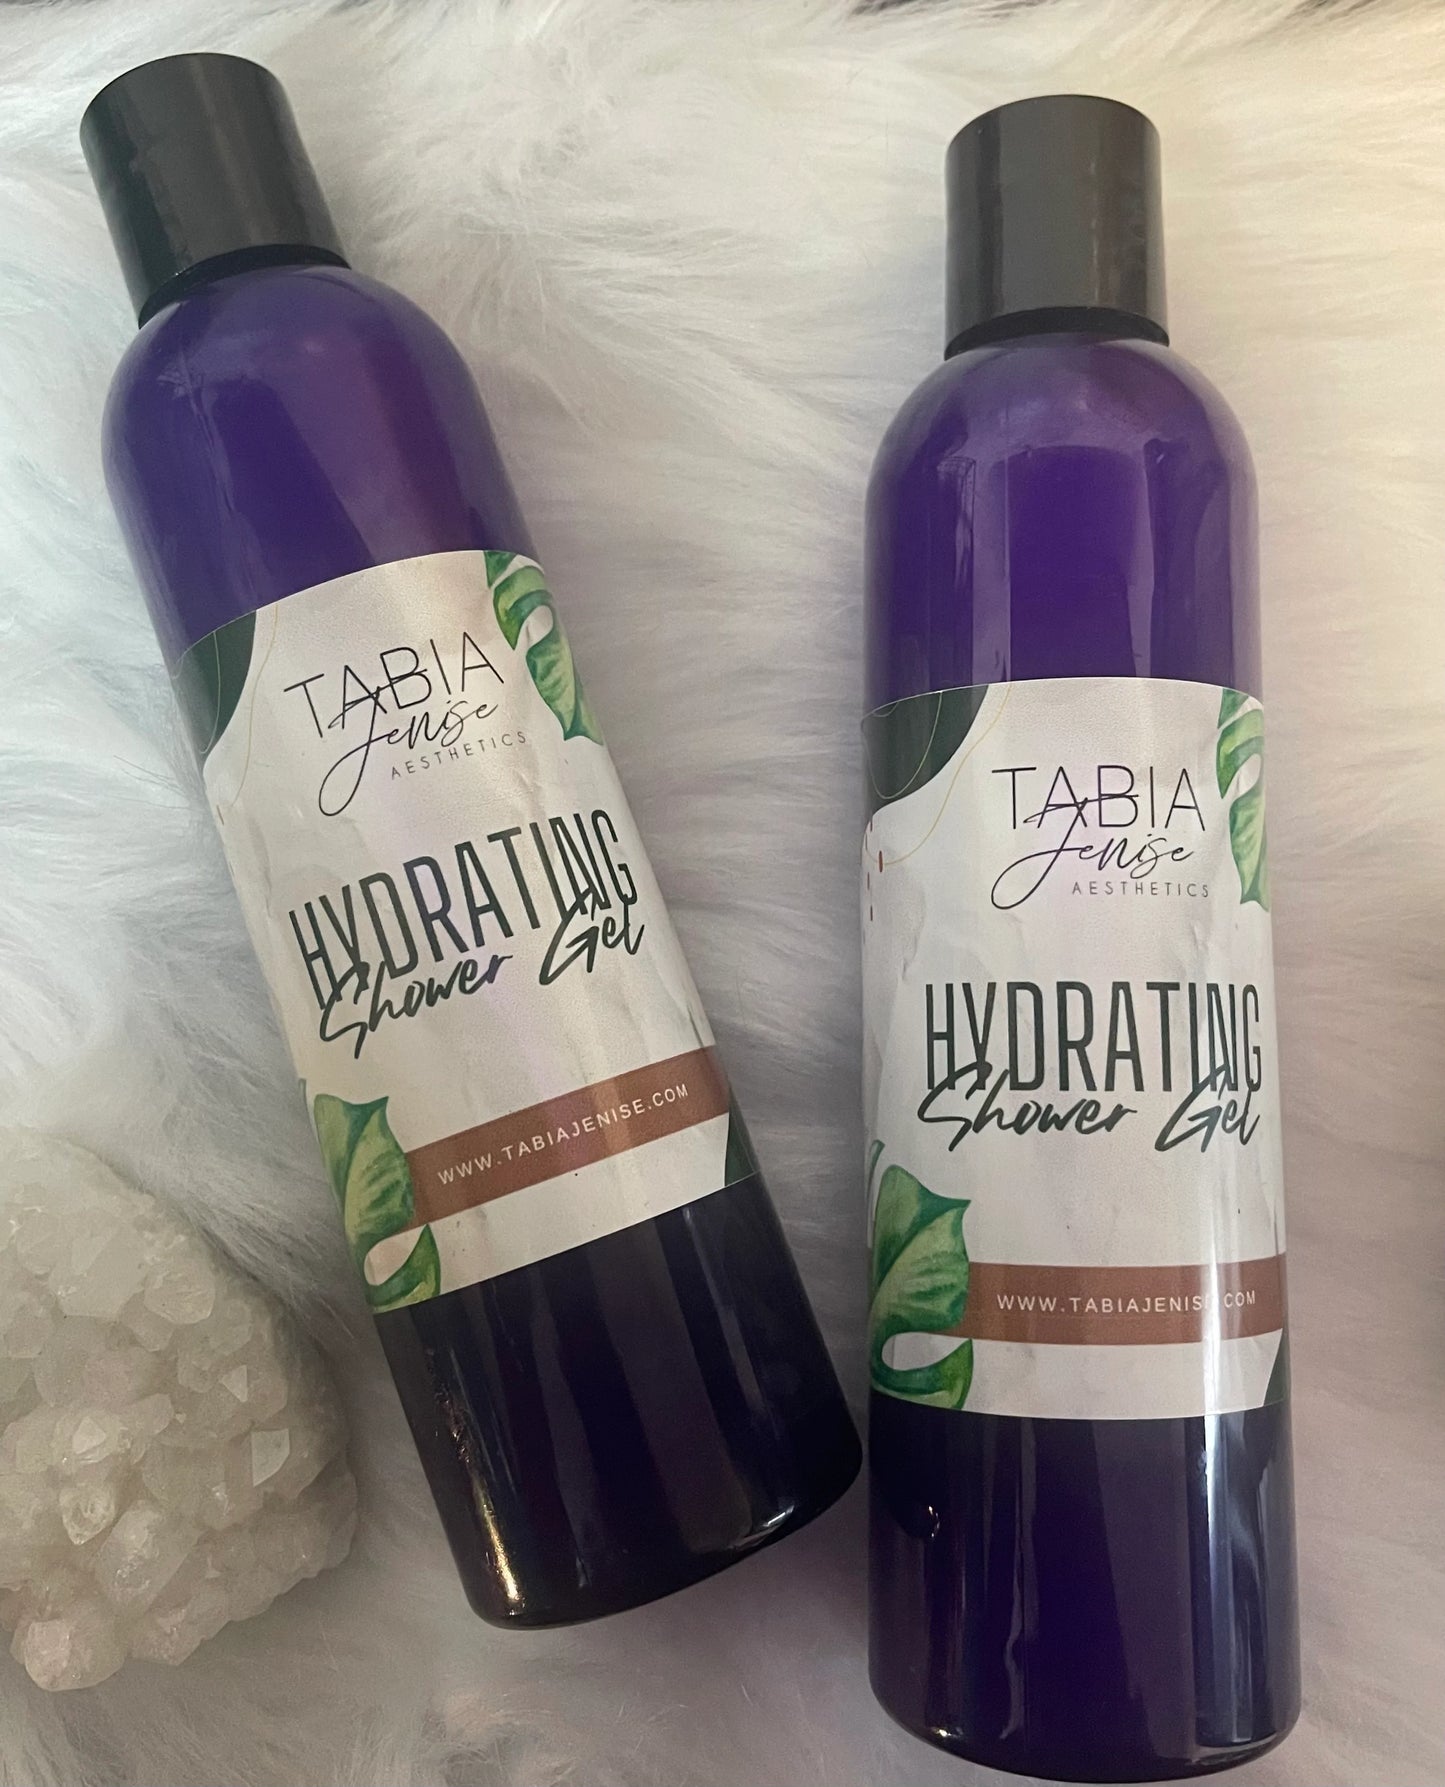 Tabia Jenise Aesthetics: Hydrating Shower Gel